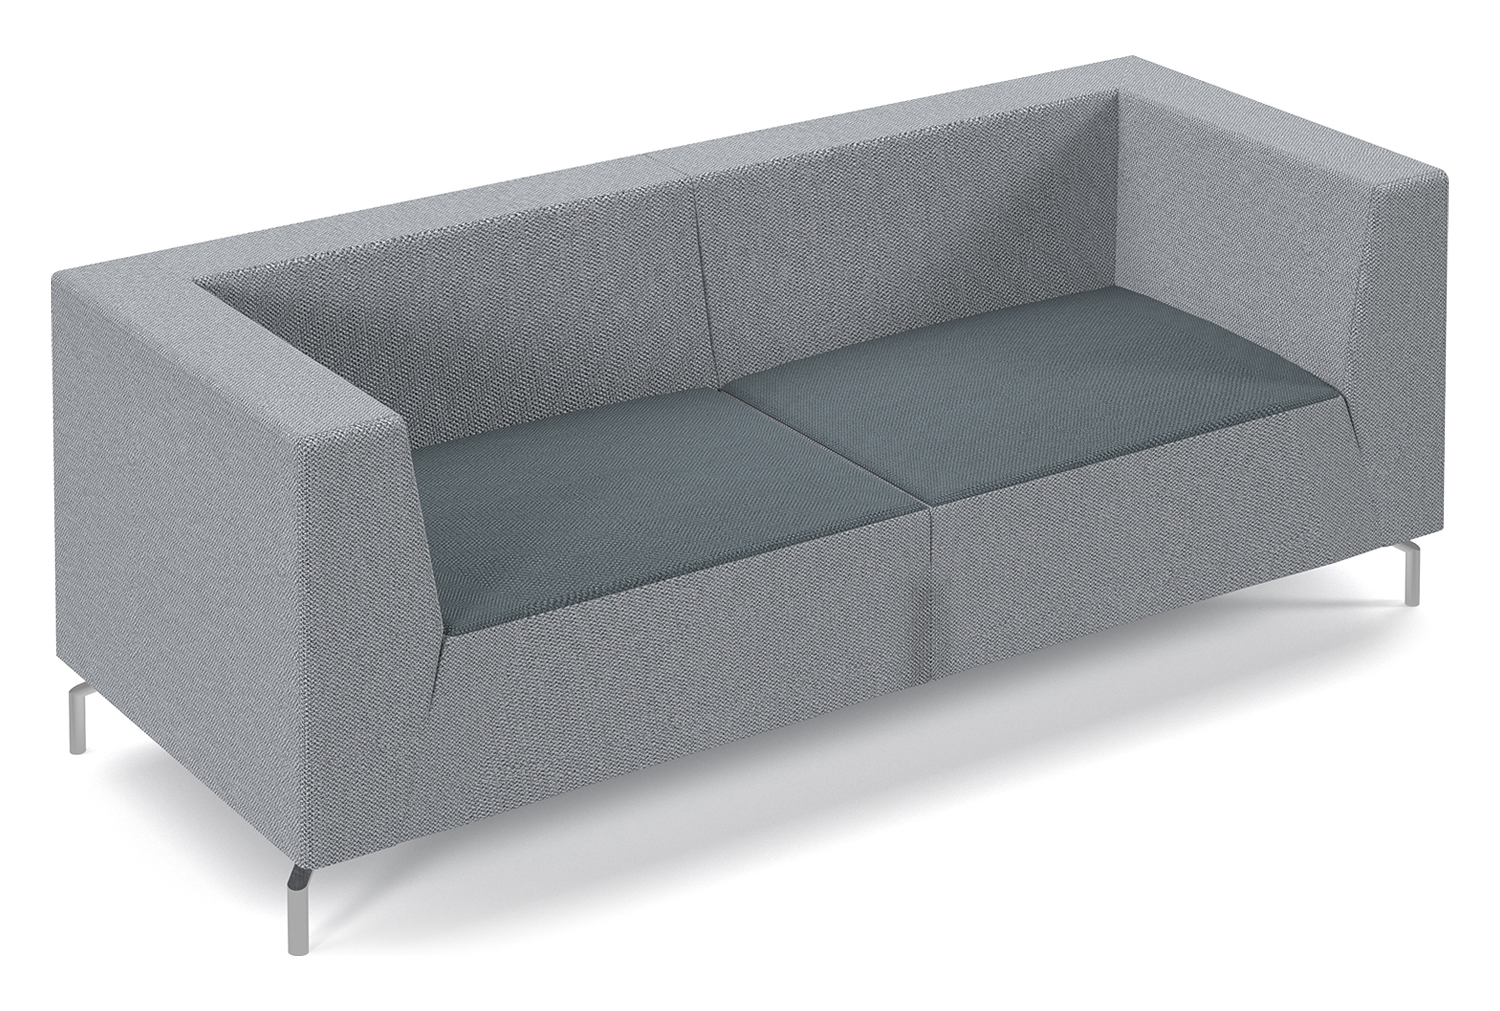 Plato 2 Tone Fabric Low Three Seater Sofa, Elapse Grey Seat/Late Back